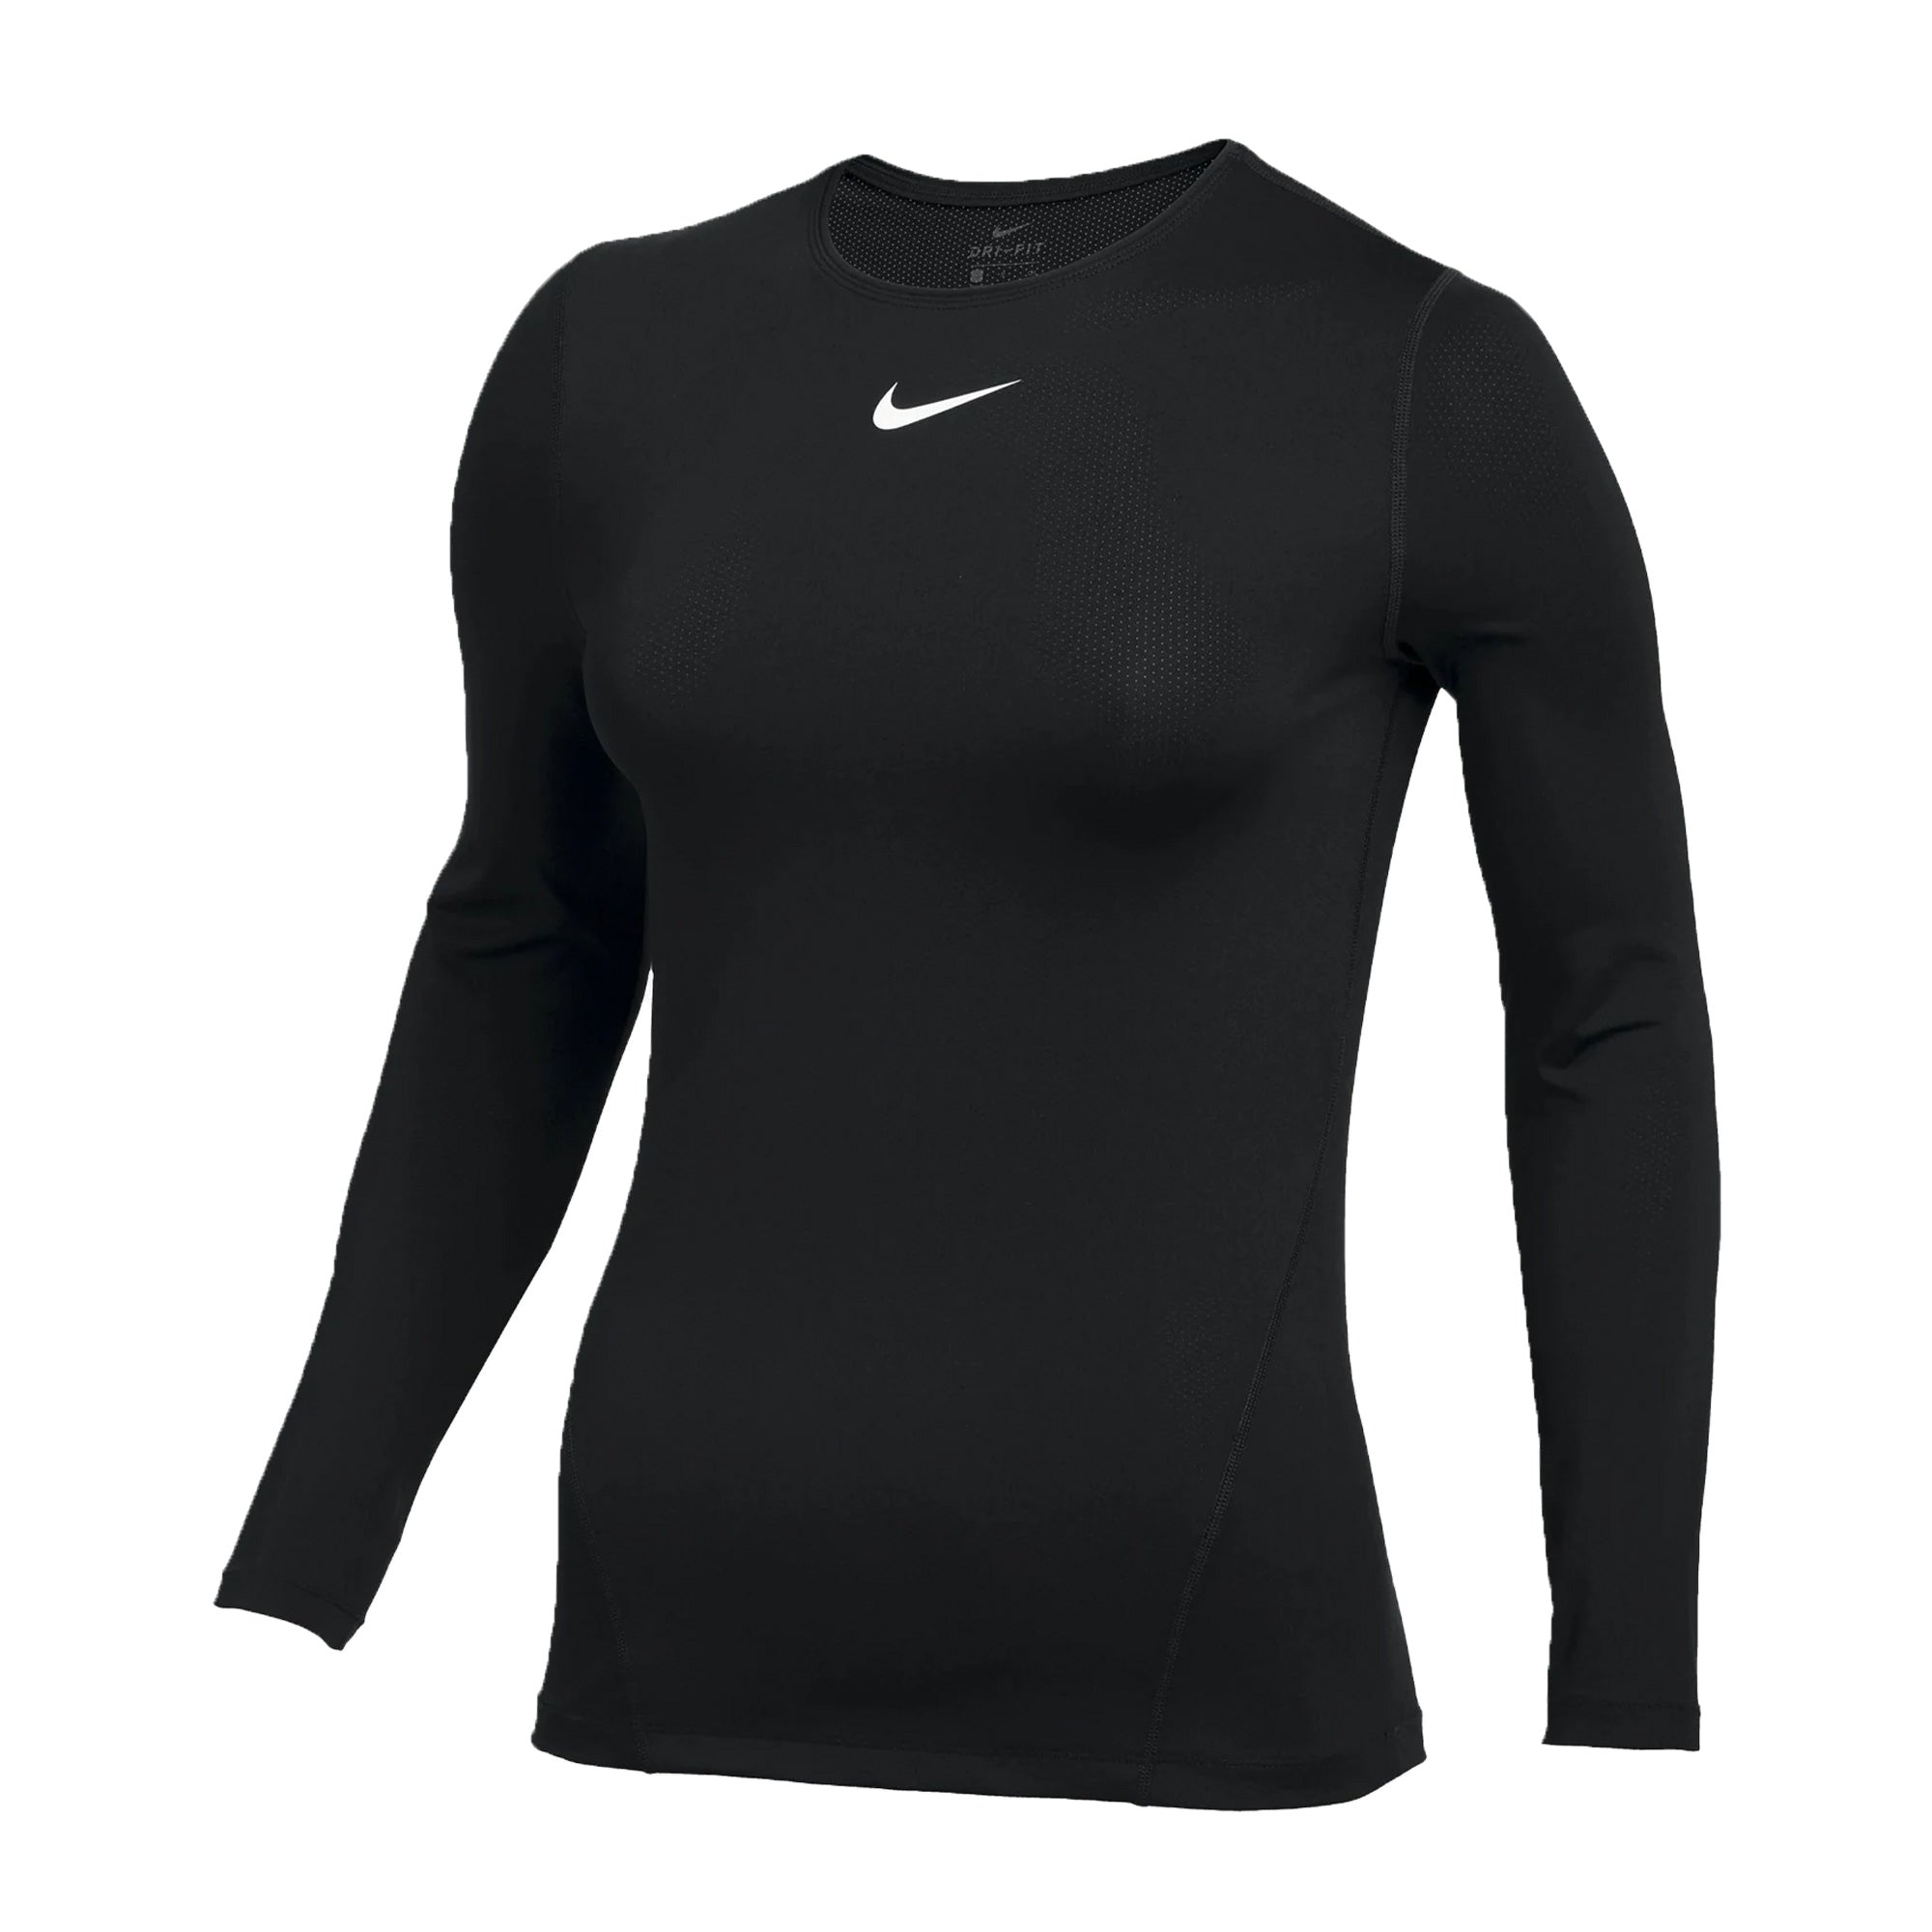 Nike Women's All Over Mesh Training Long Sleeve Top Black – Azteca